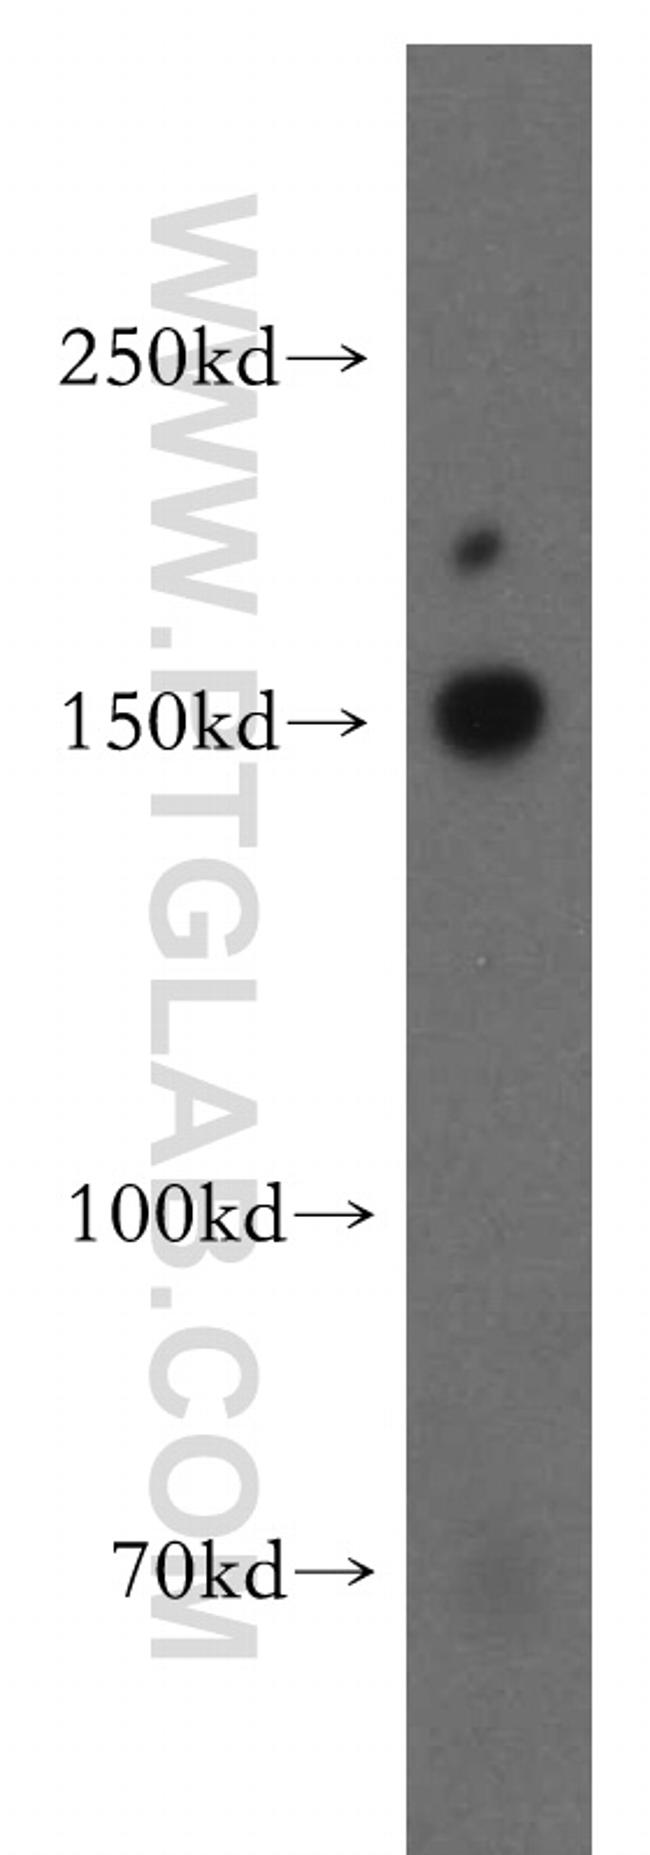 MINK1 Antibody in Western Blot (WB)